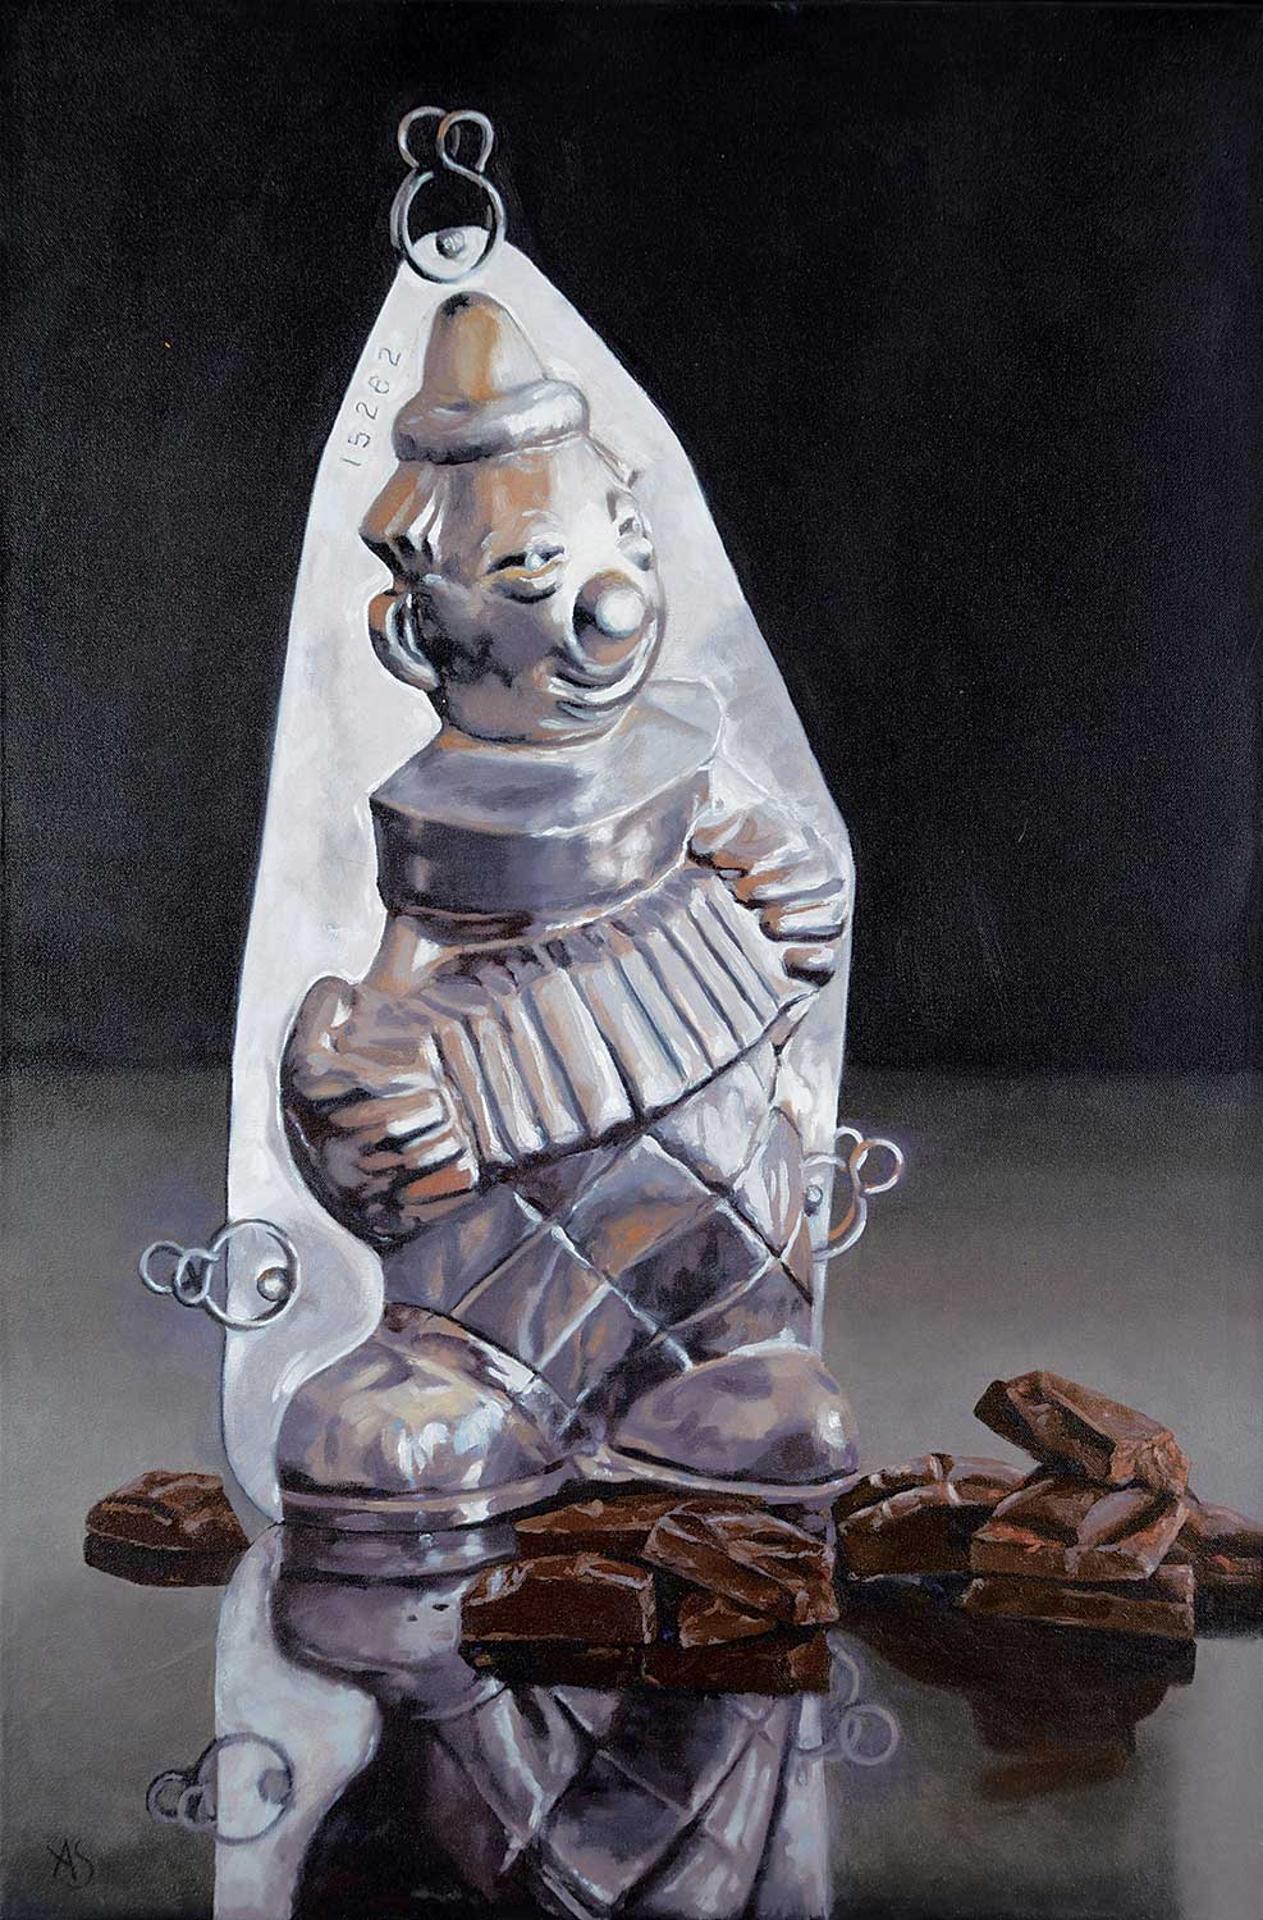 Allan - Chocolate Mold